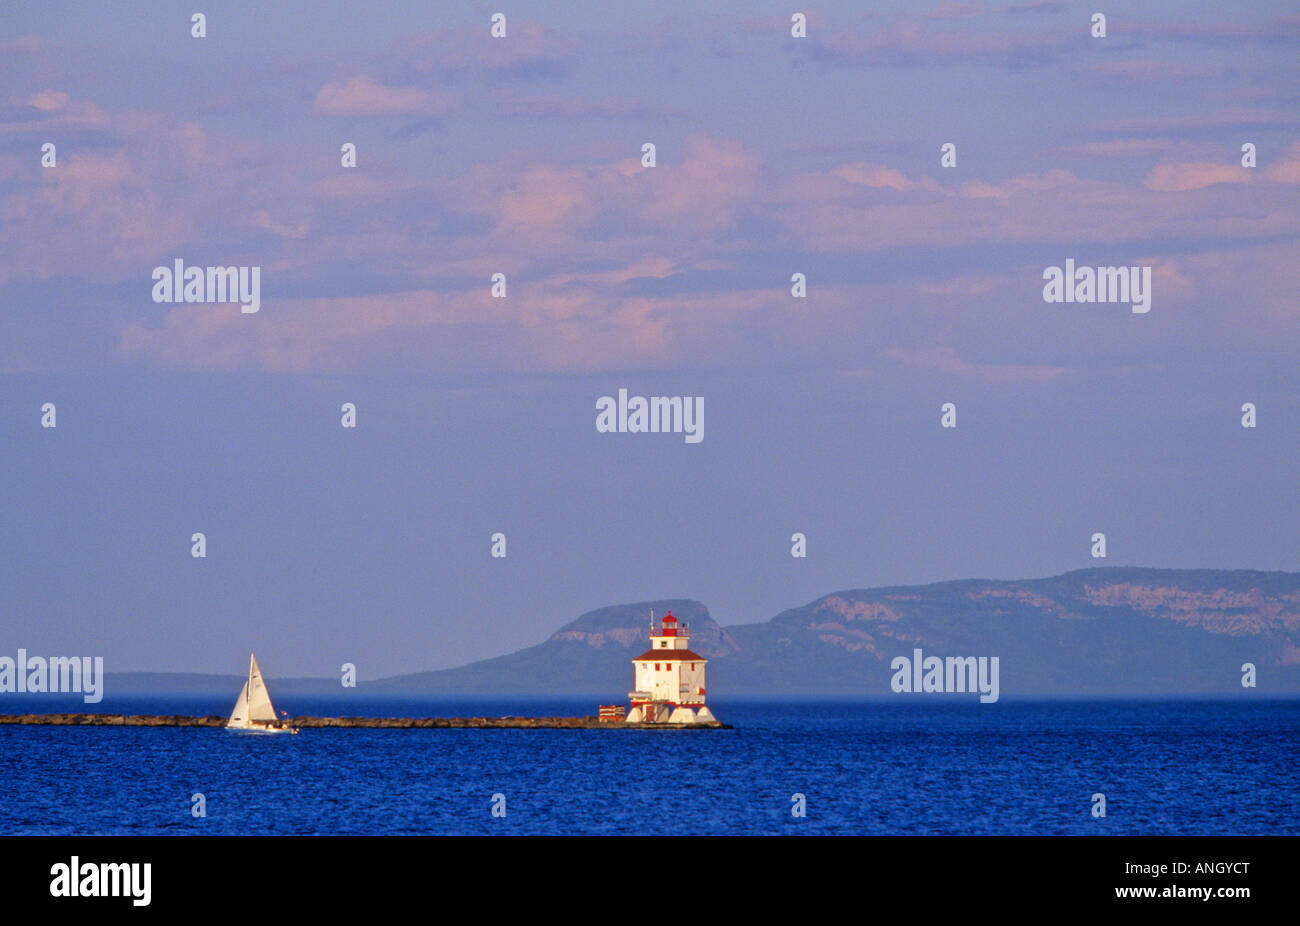 Lighthouse and sailboat, Thunder Bay, Ontario, Canada. Stock Photo